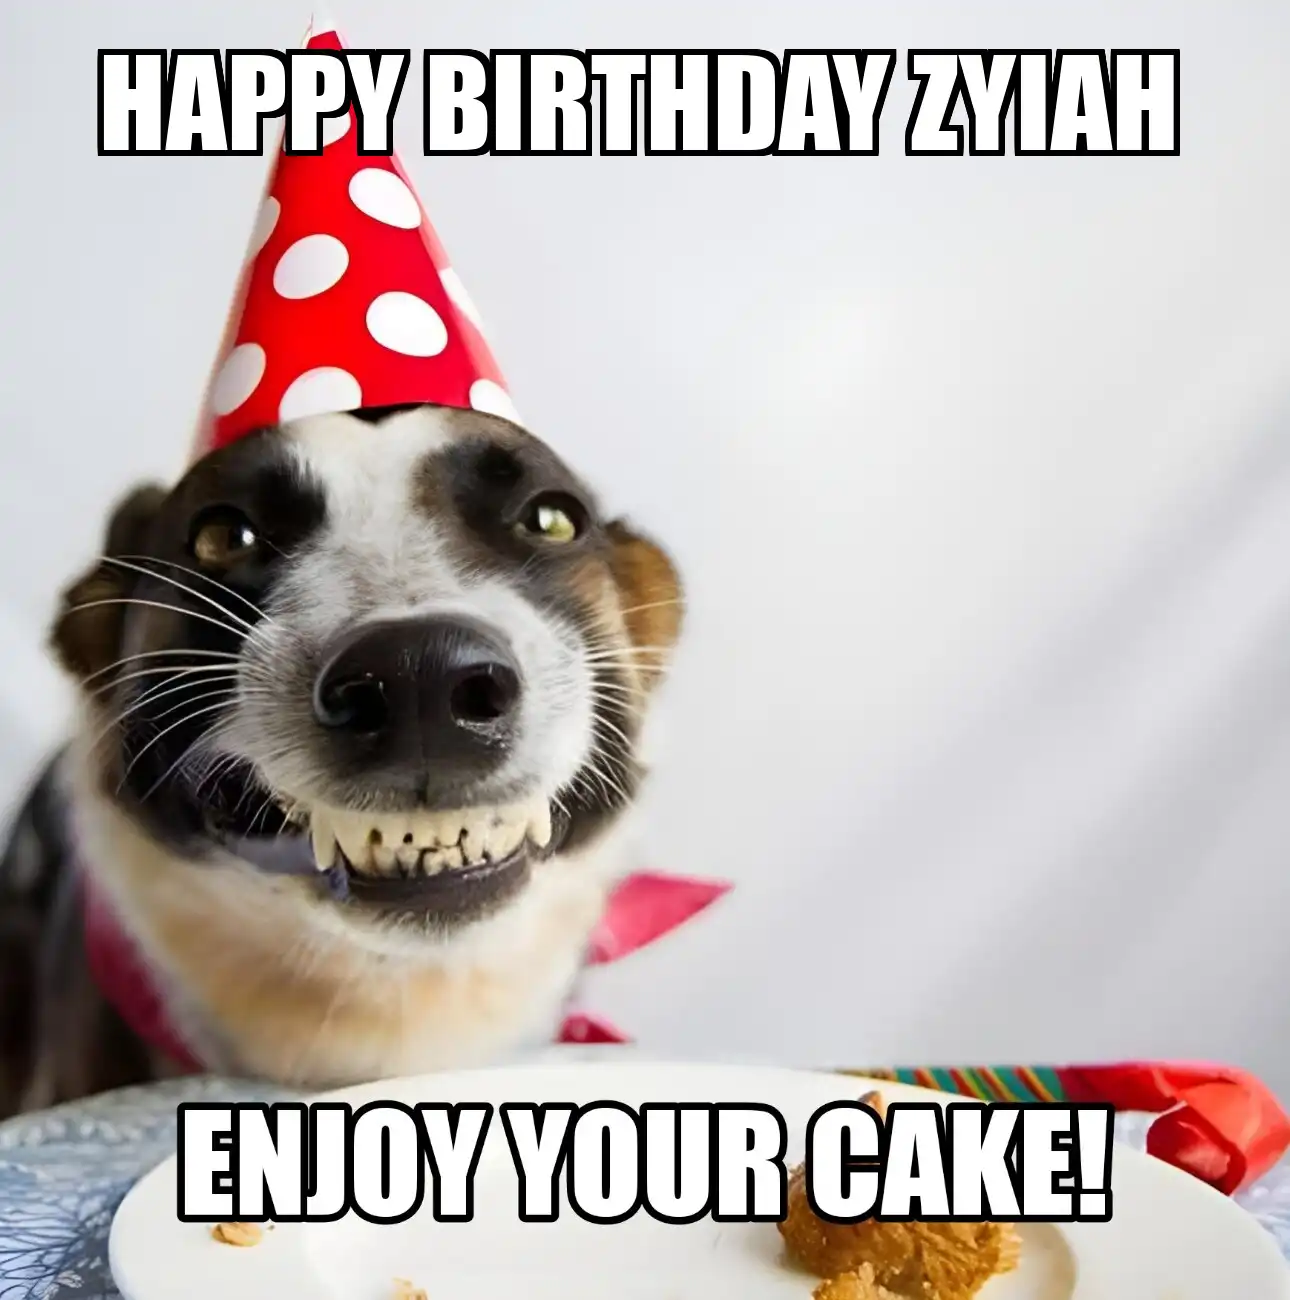 Happy Birthday Zyiah Enjoy Your Cake Dog Meme